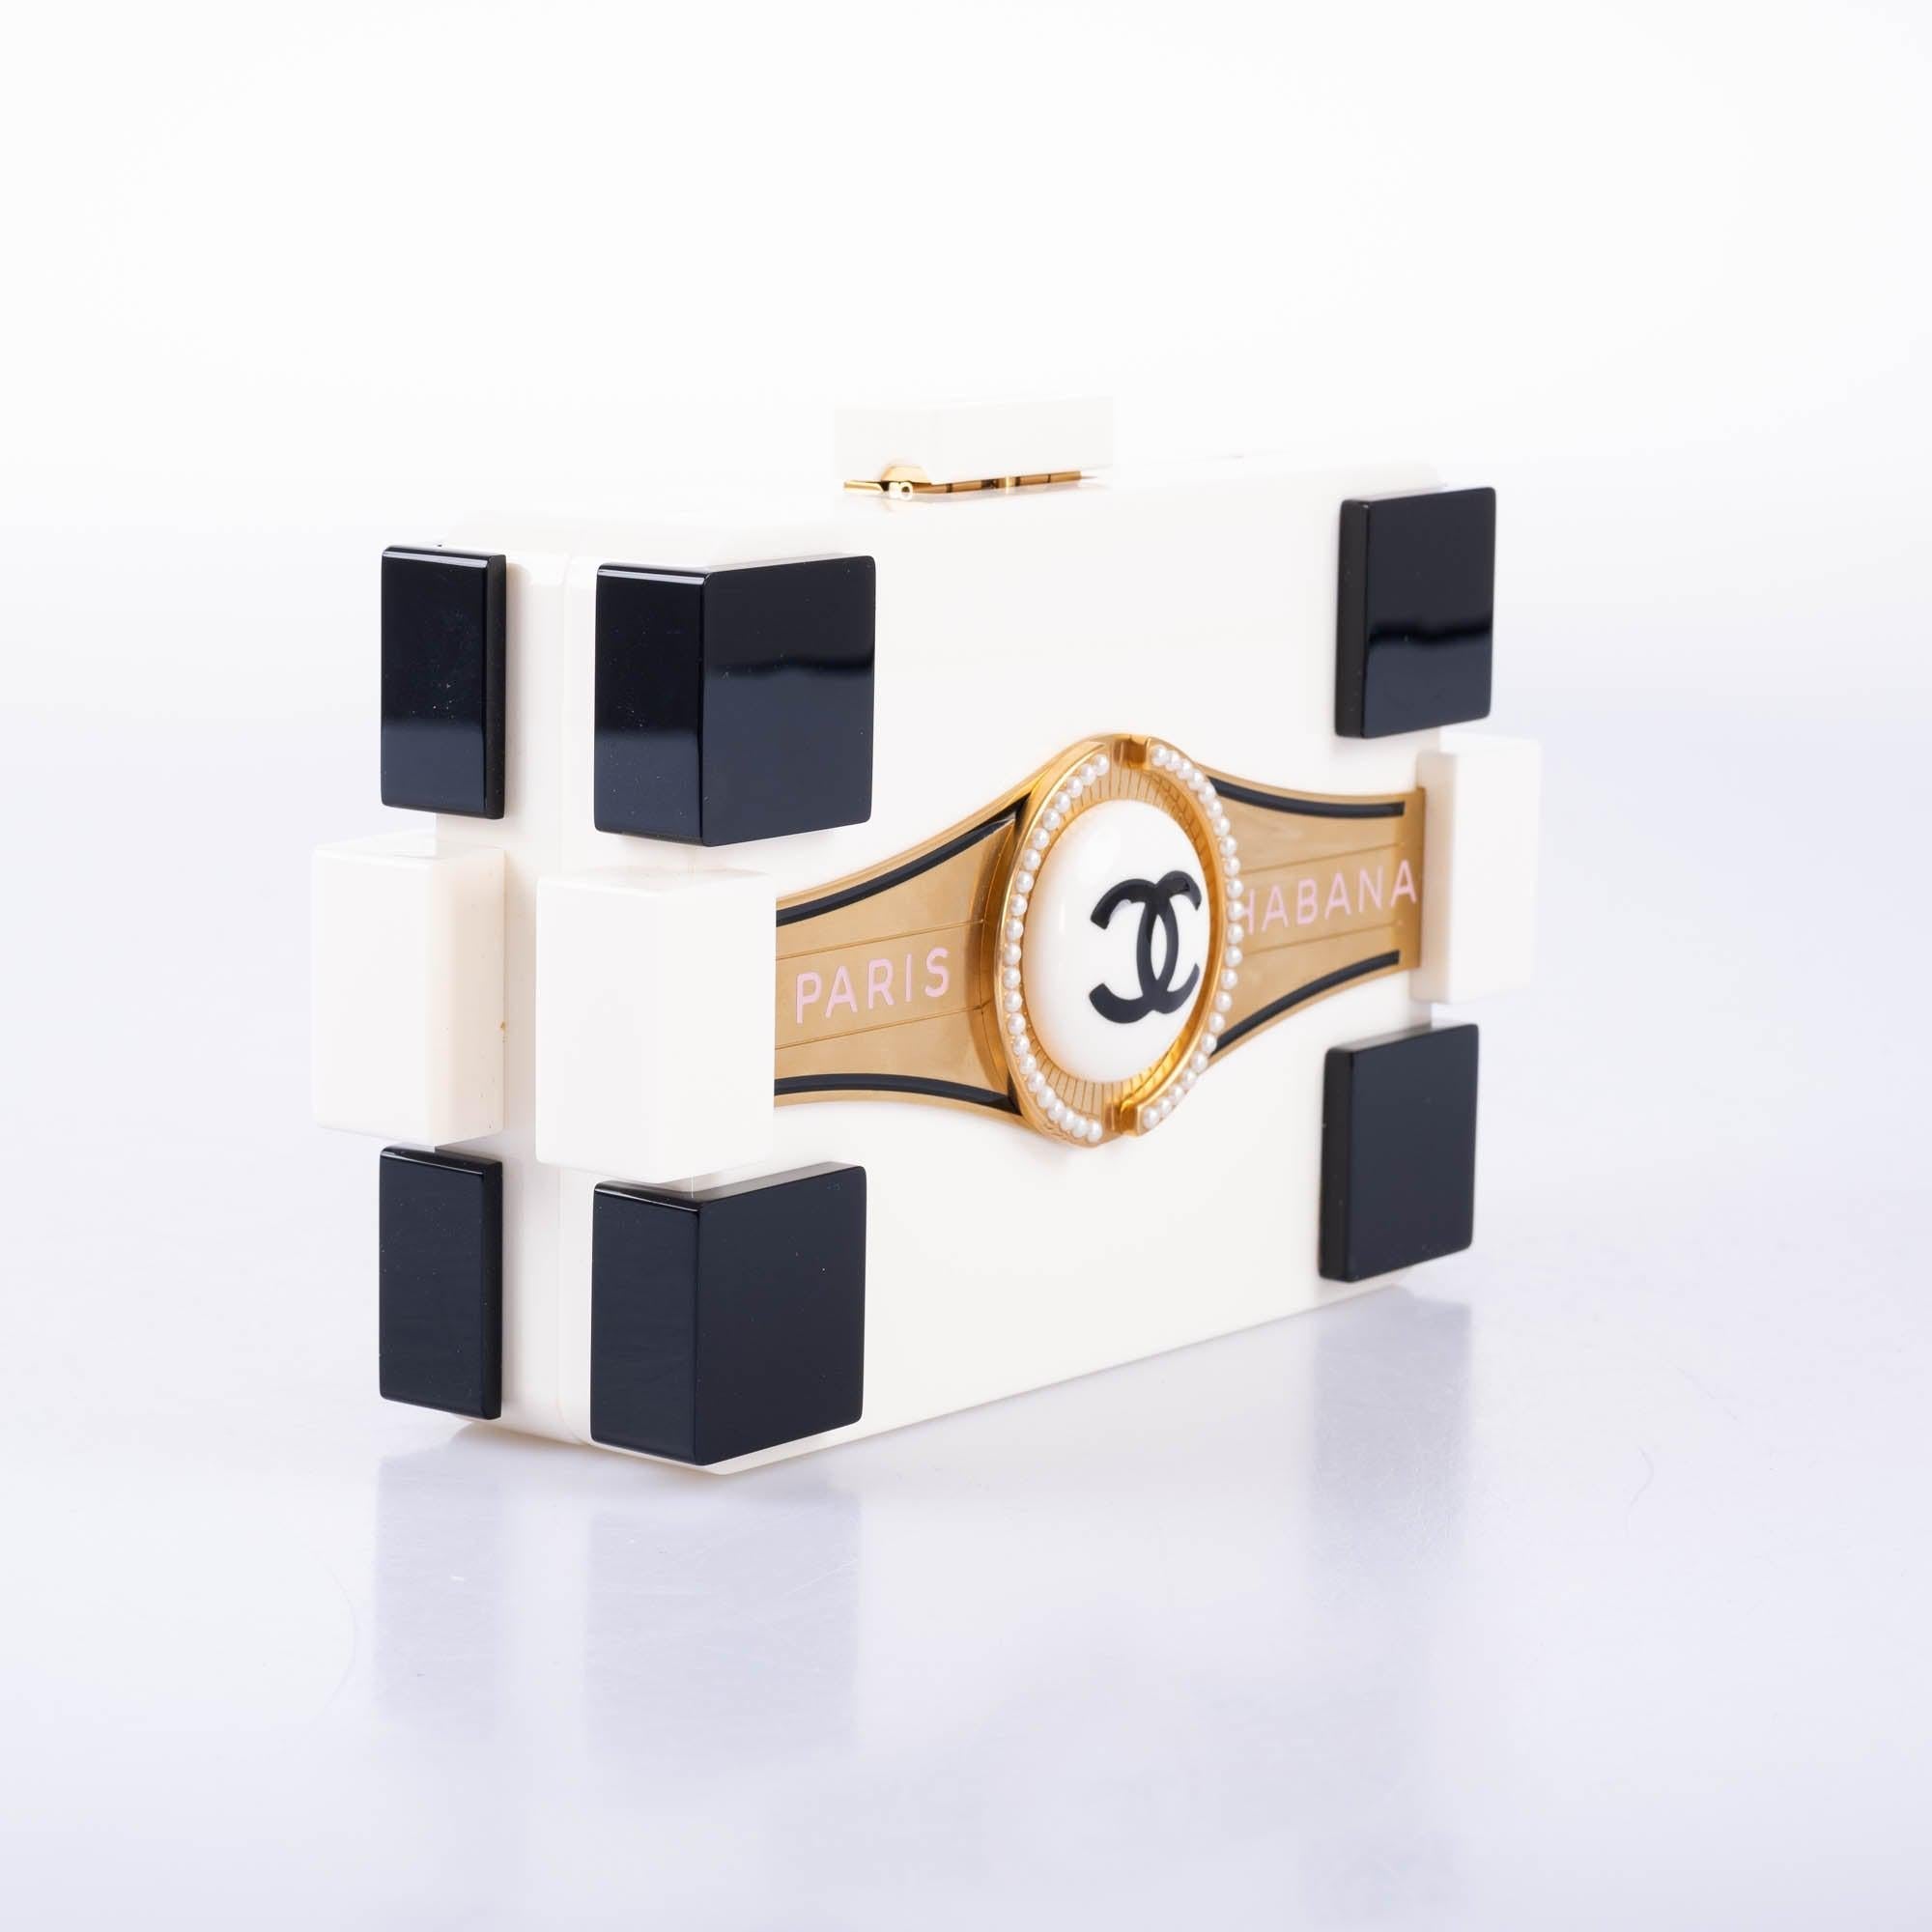 Chanel Havana by Night Paris-Habana Plexiglass Boy Brick Lego Bag